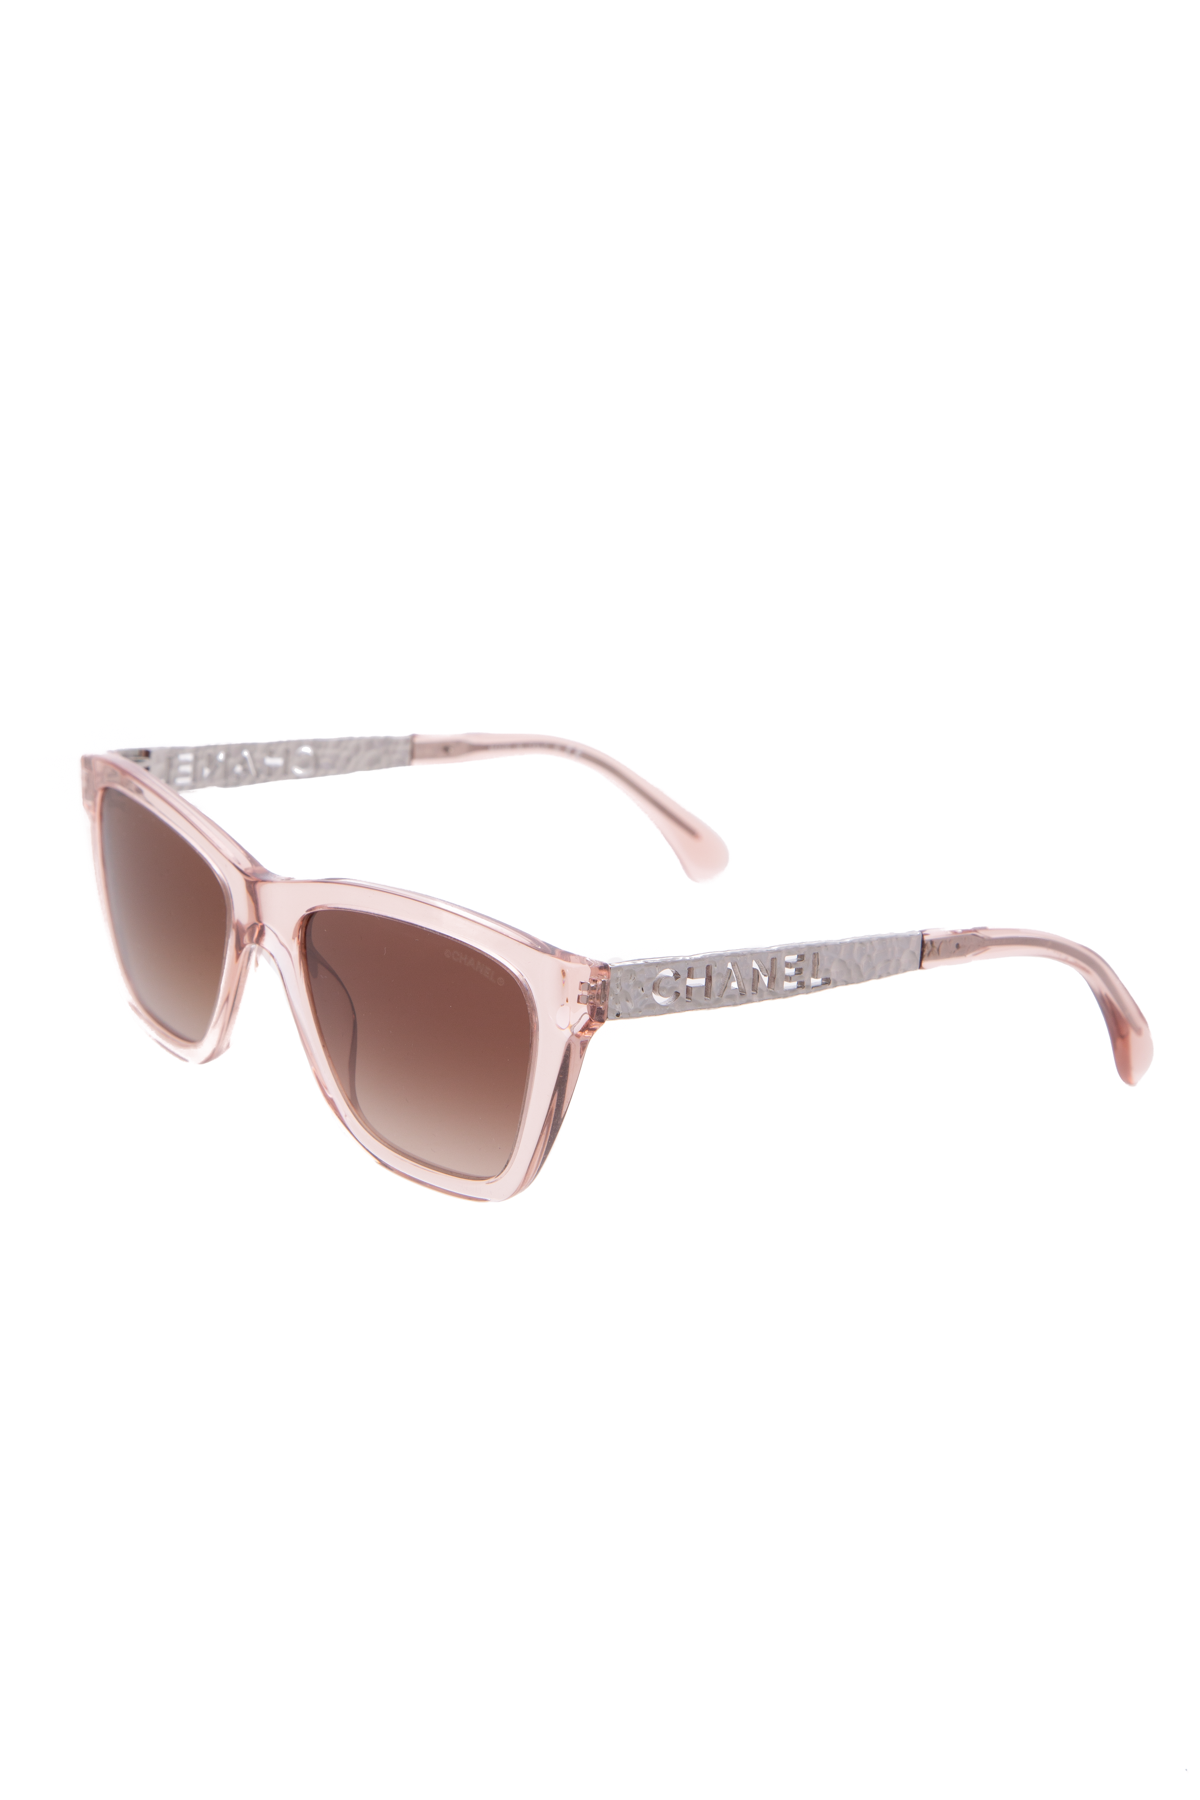 Chanel 5481H C888/T8 Sunglasses